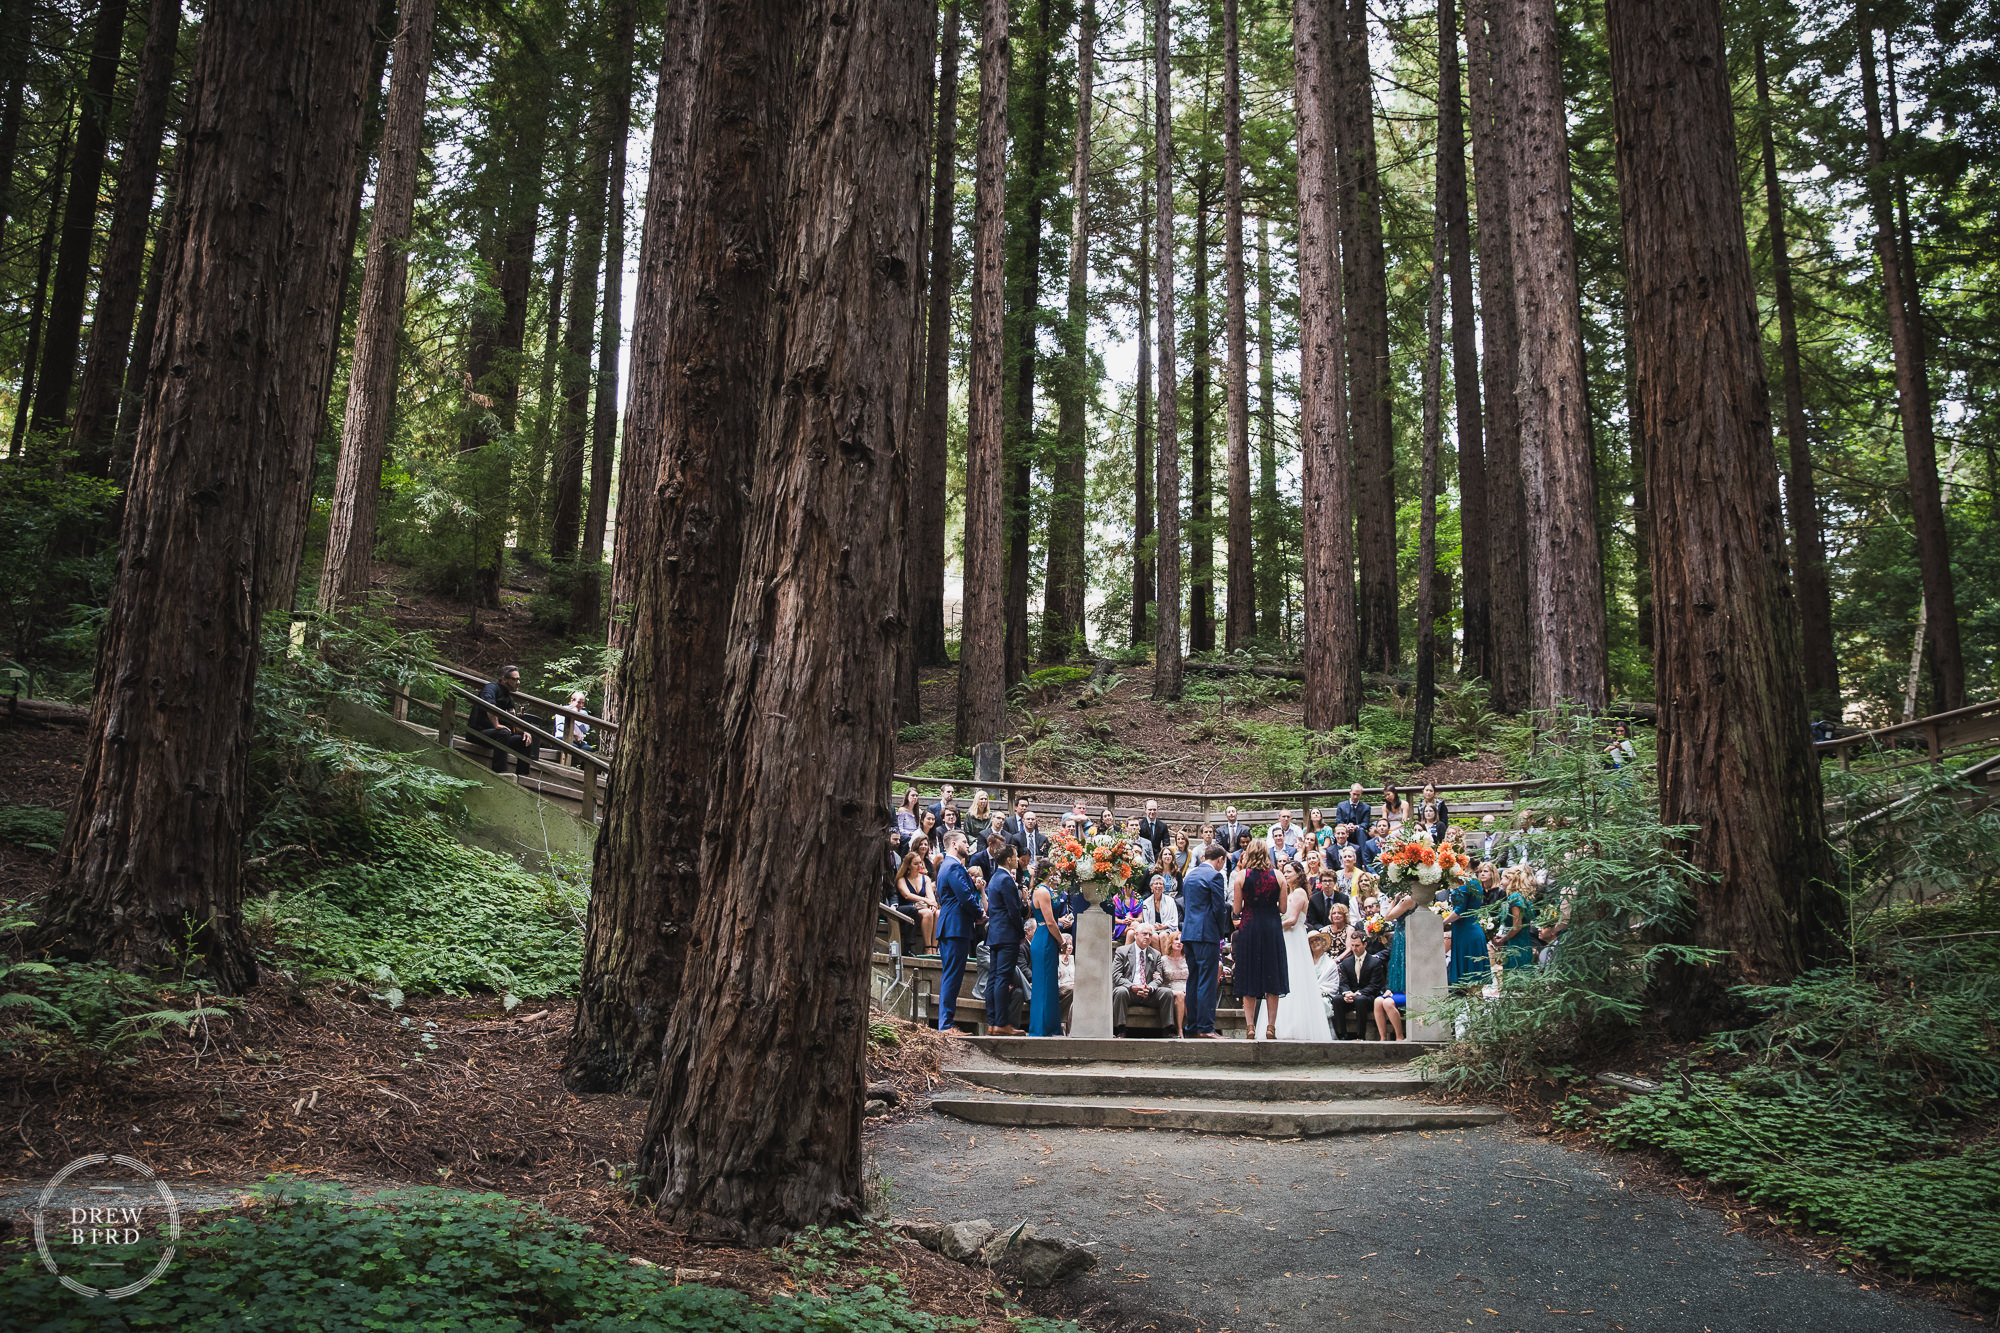 UC Botanical Gardens redwood forest wedding ceremony in Berkeley, California.